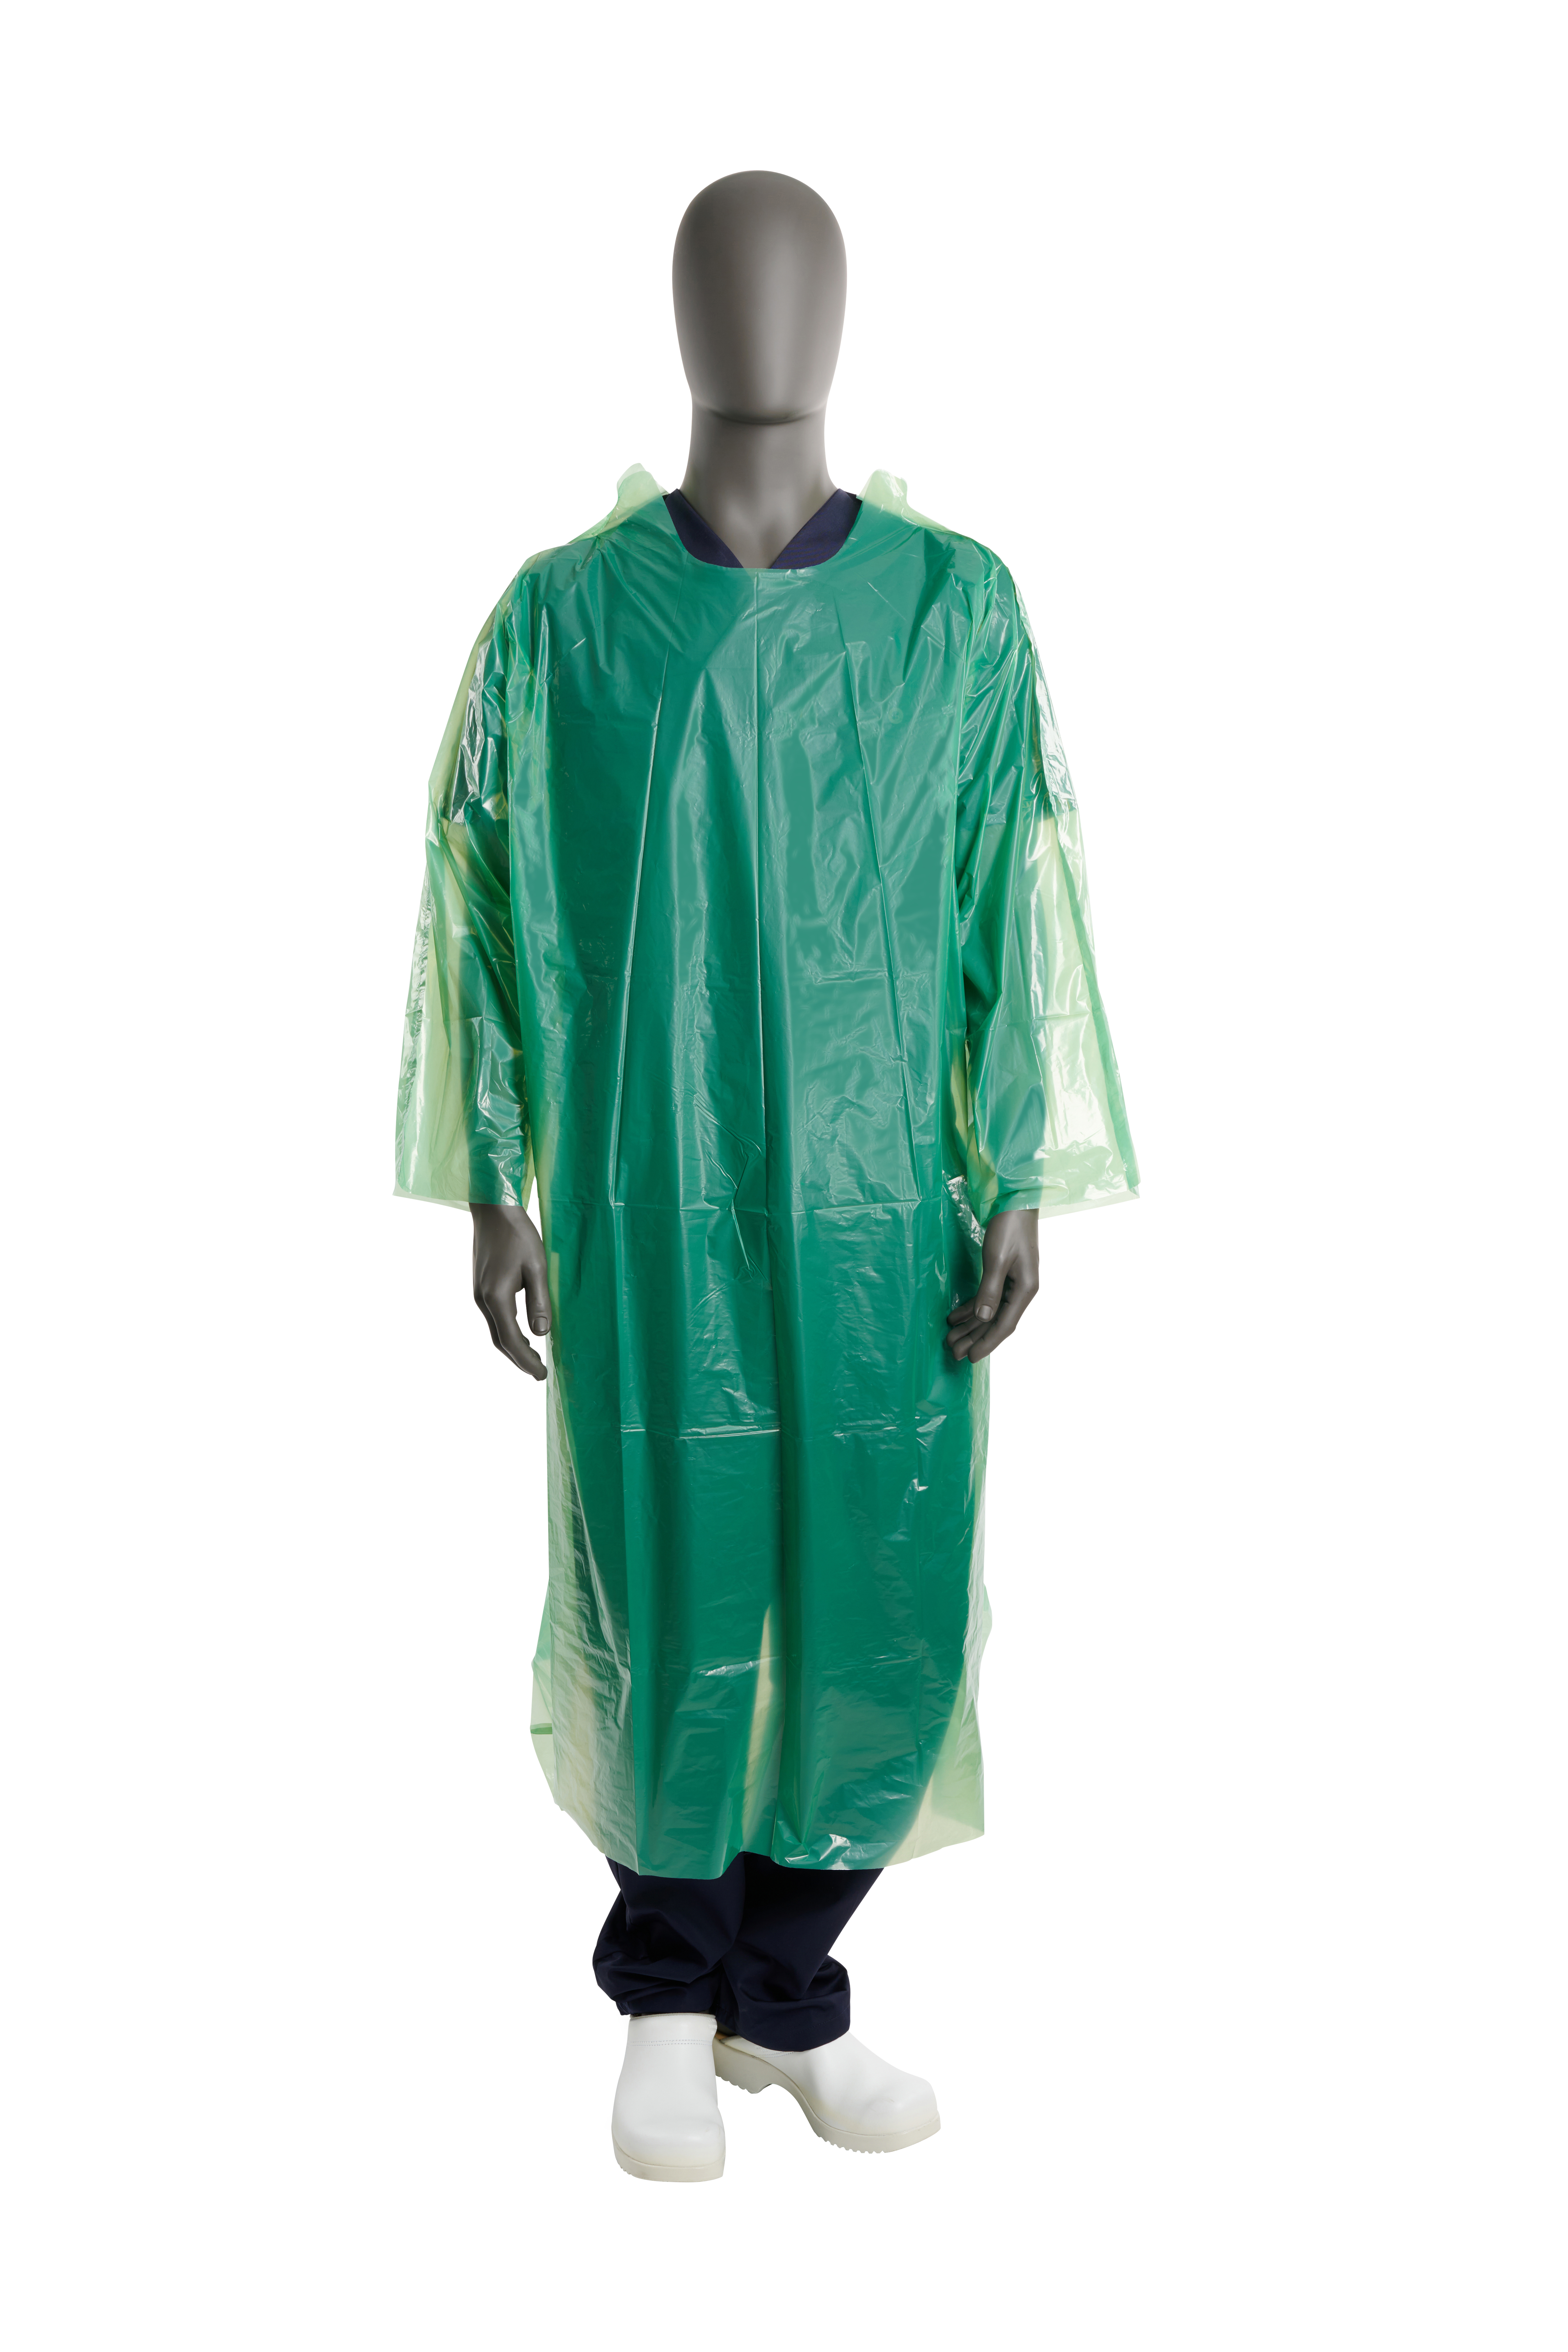 KRUTEX green disposable gown, 20/pk